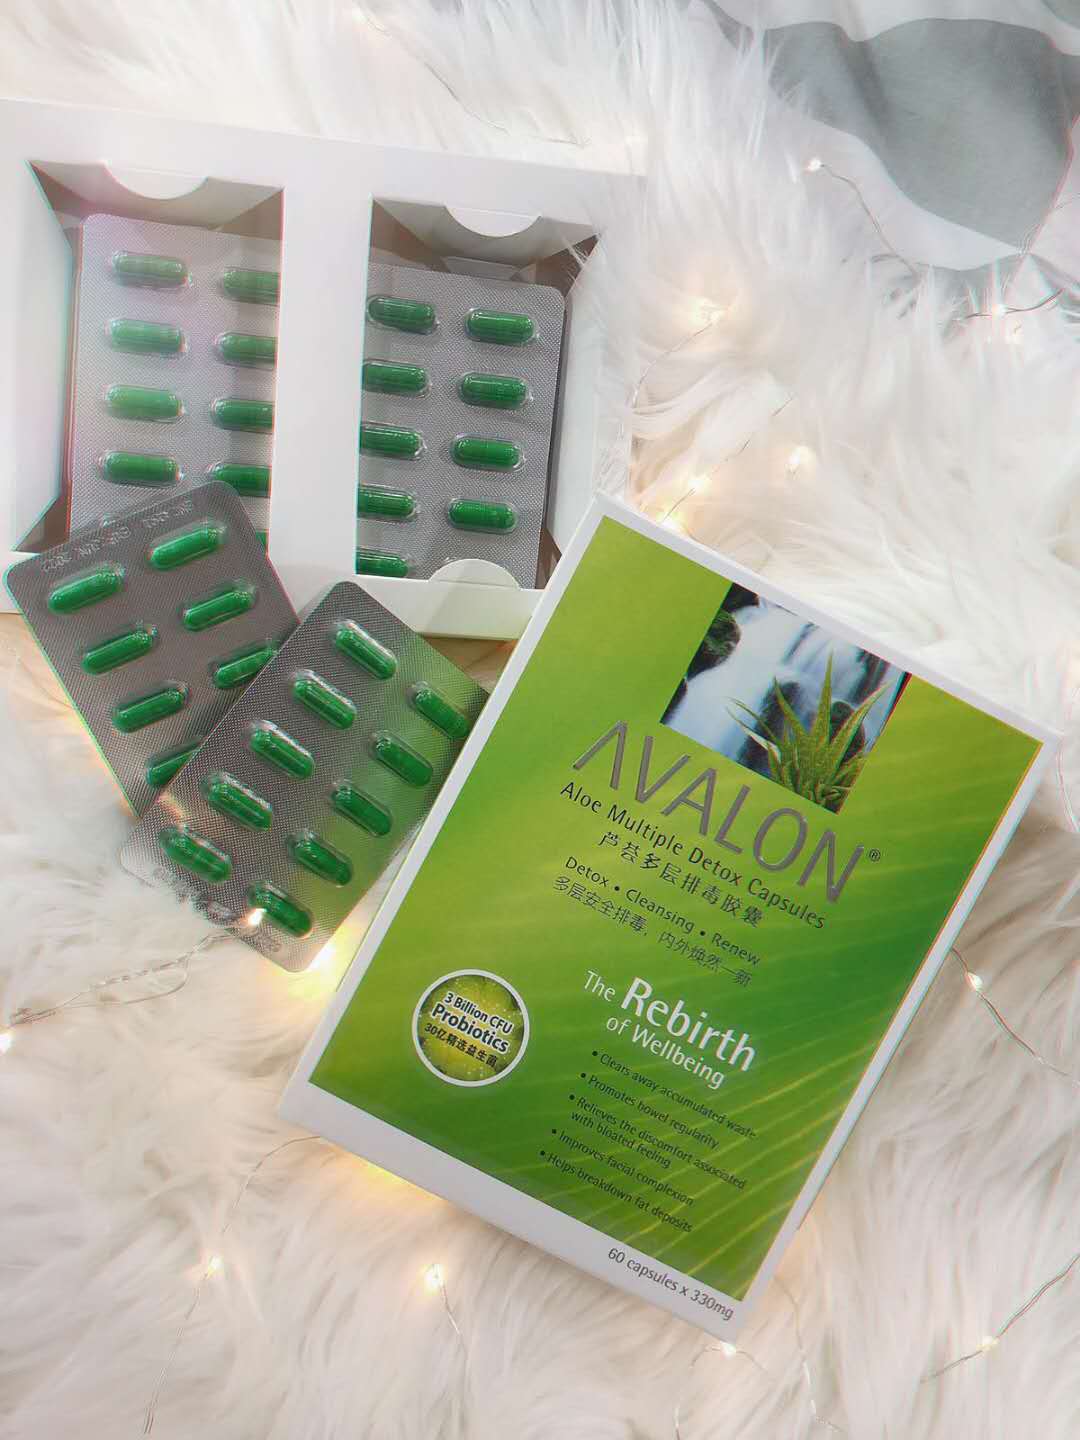 AVALON® Aloe Multiple Detox (W/ 5 Billion CFUS Probiotics) Value Twin Pack + 20 Capsules